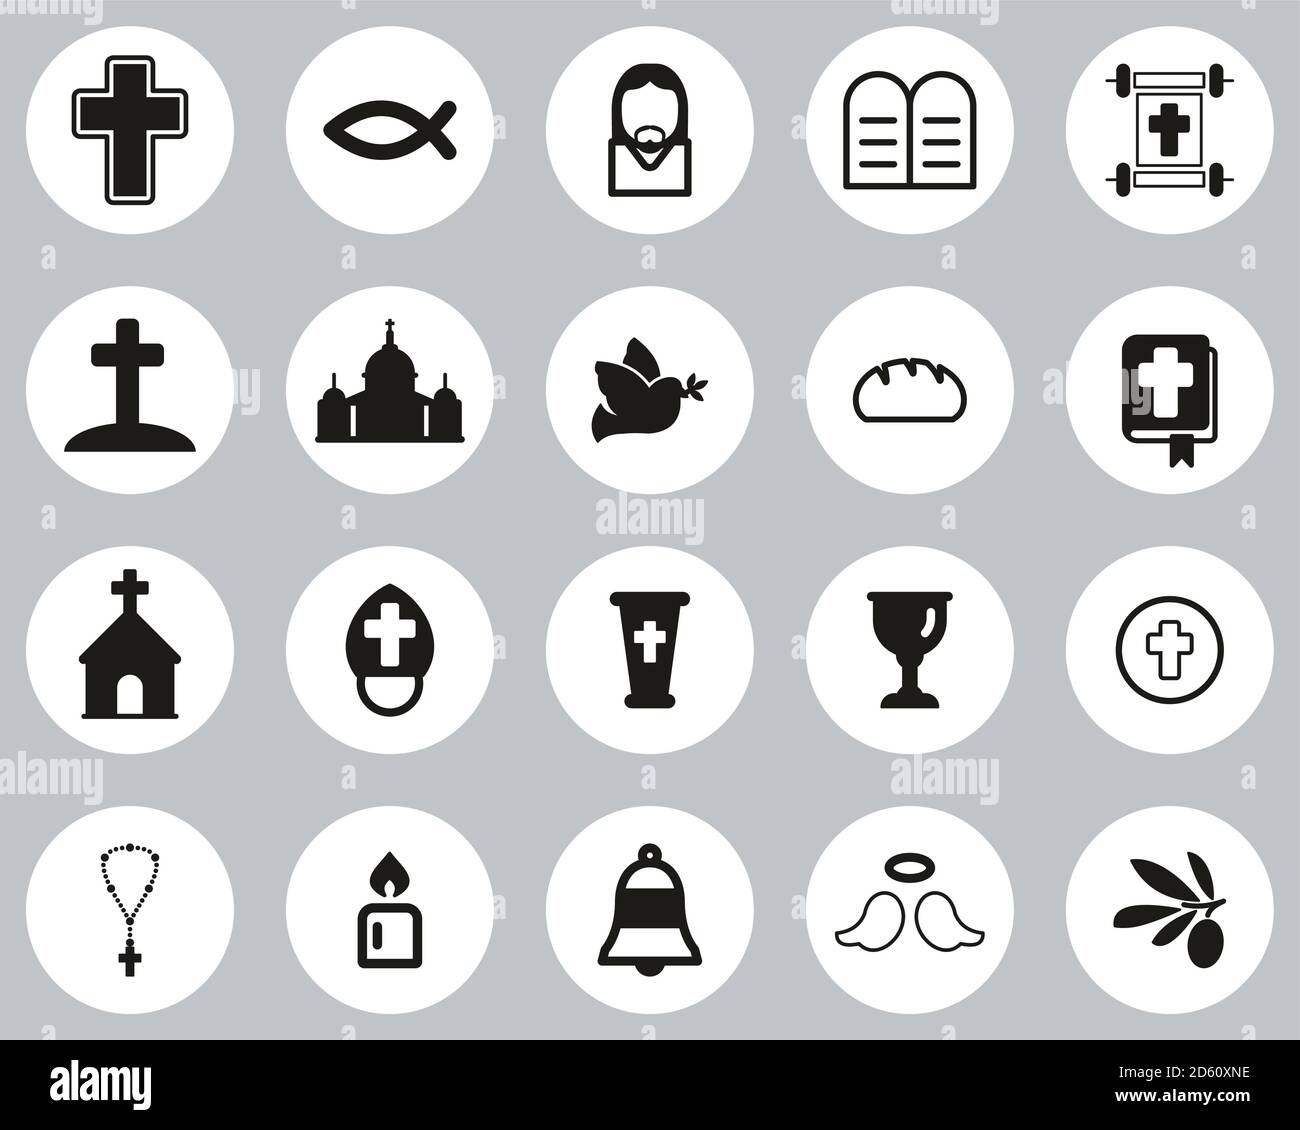 Christianity Religion & Religious Items Icons Black & White Flat Design Circle Set Big Stock Vector